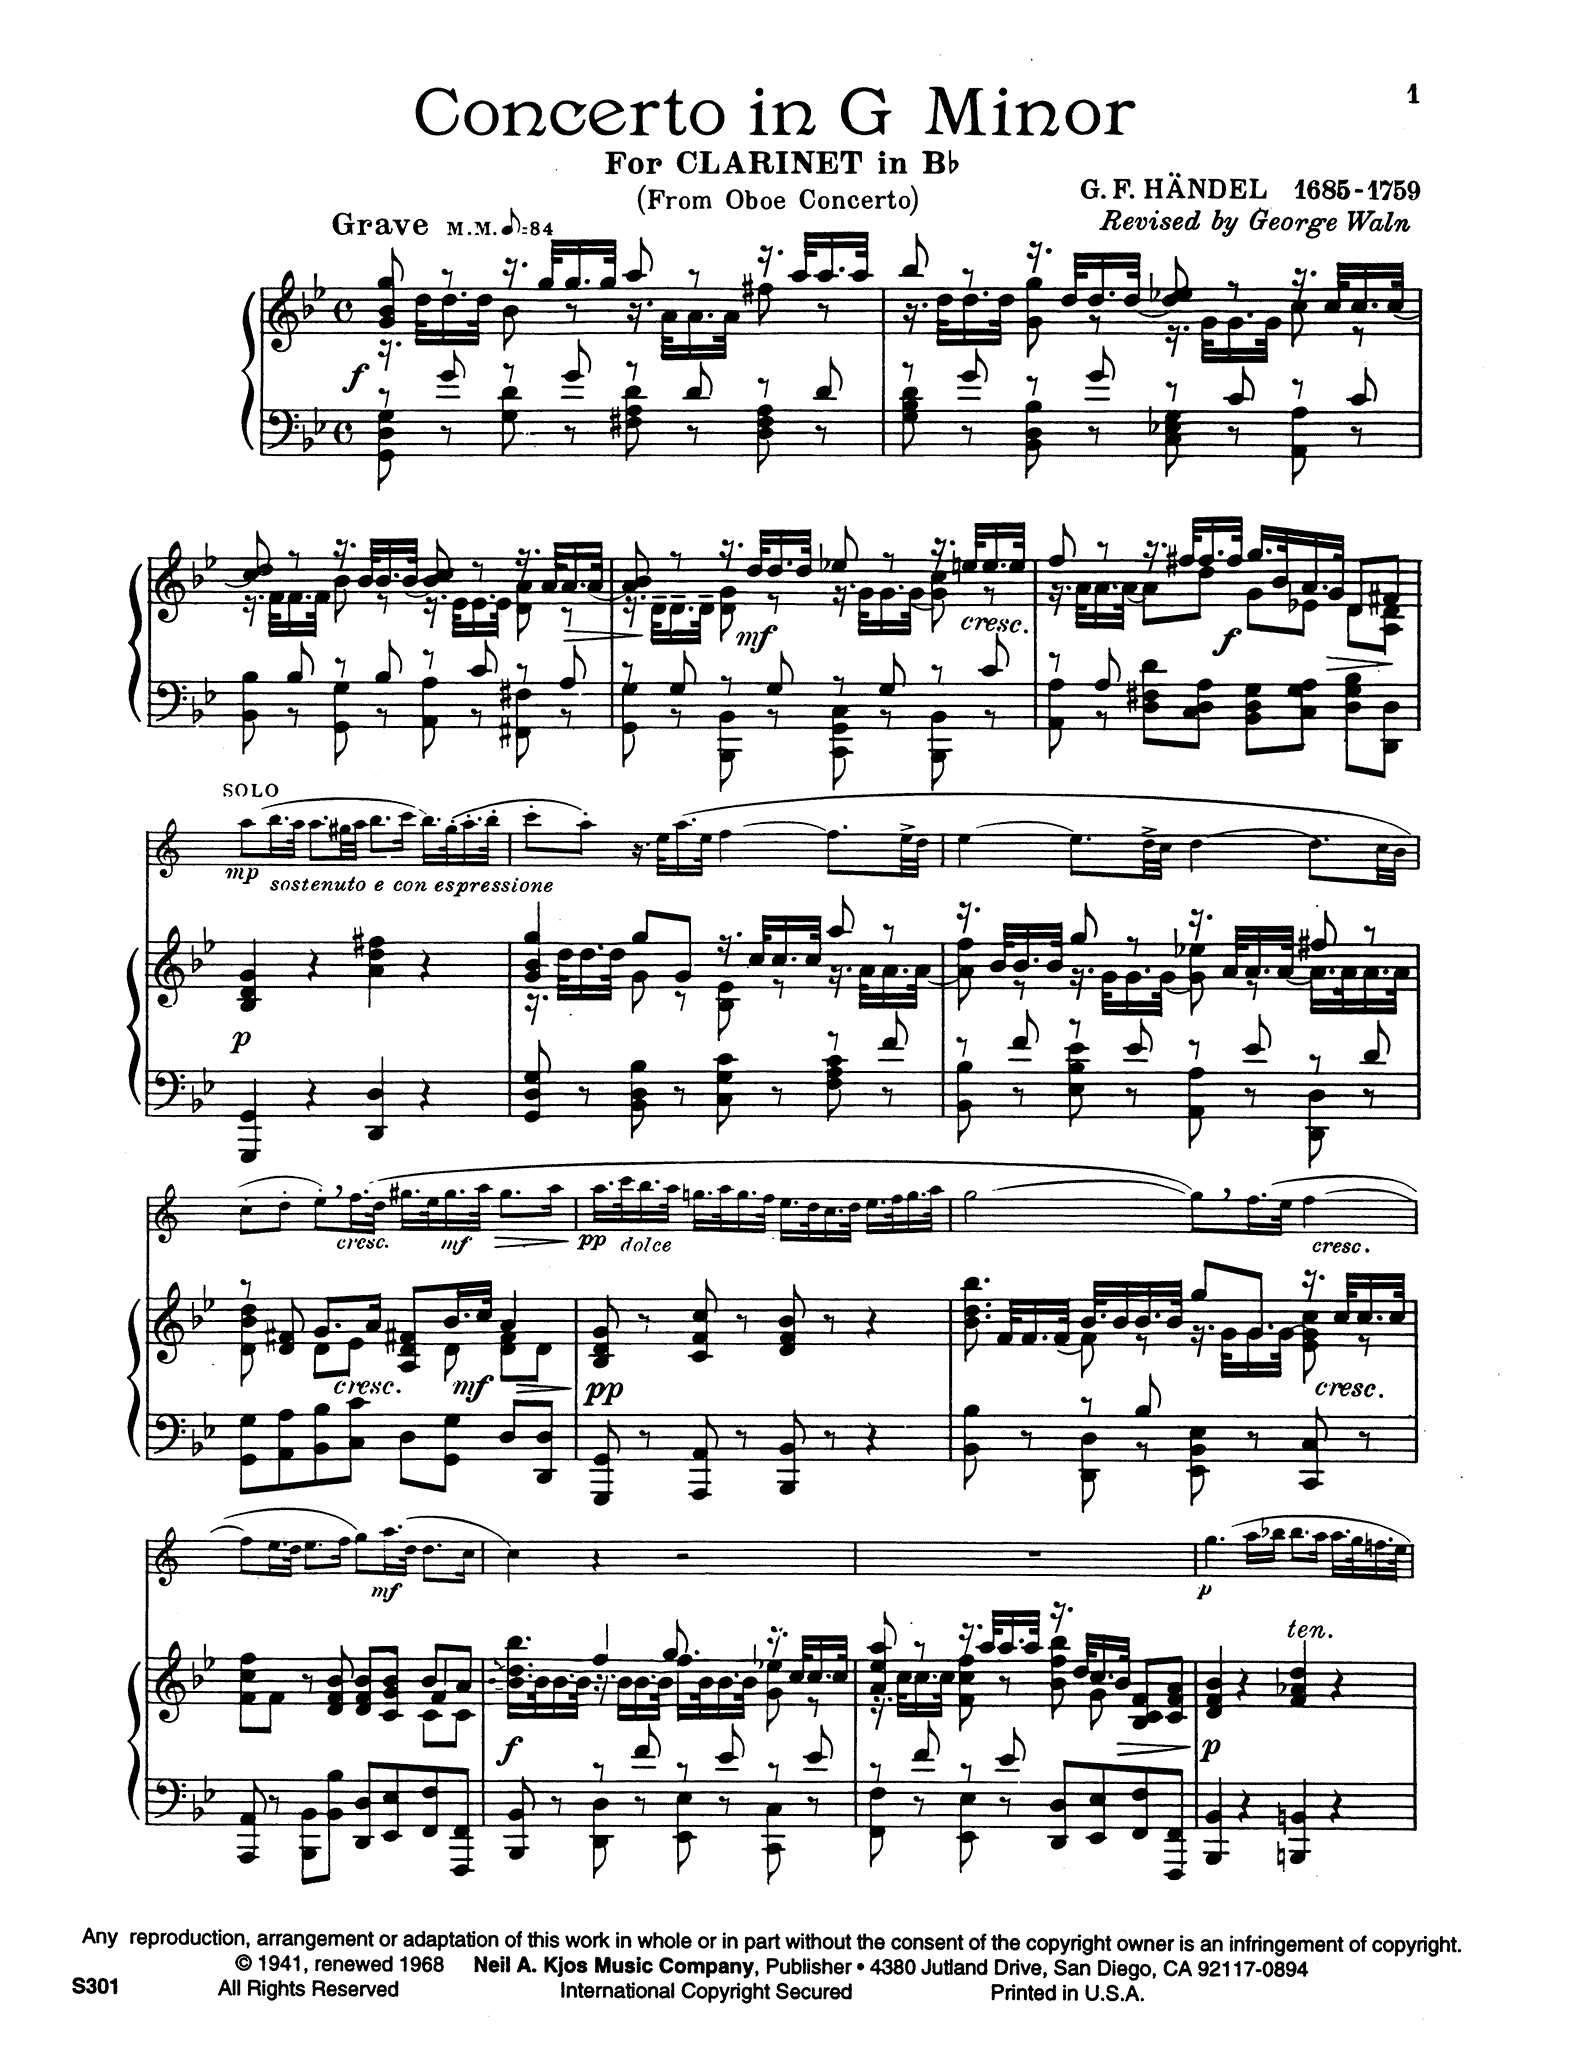 Oboe Concerto No. 3 in G Minor, HWV 287 Score Page 1